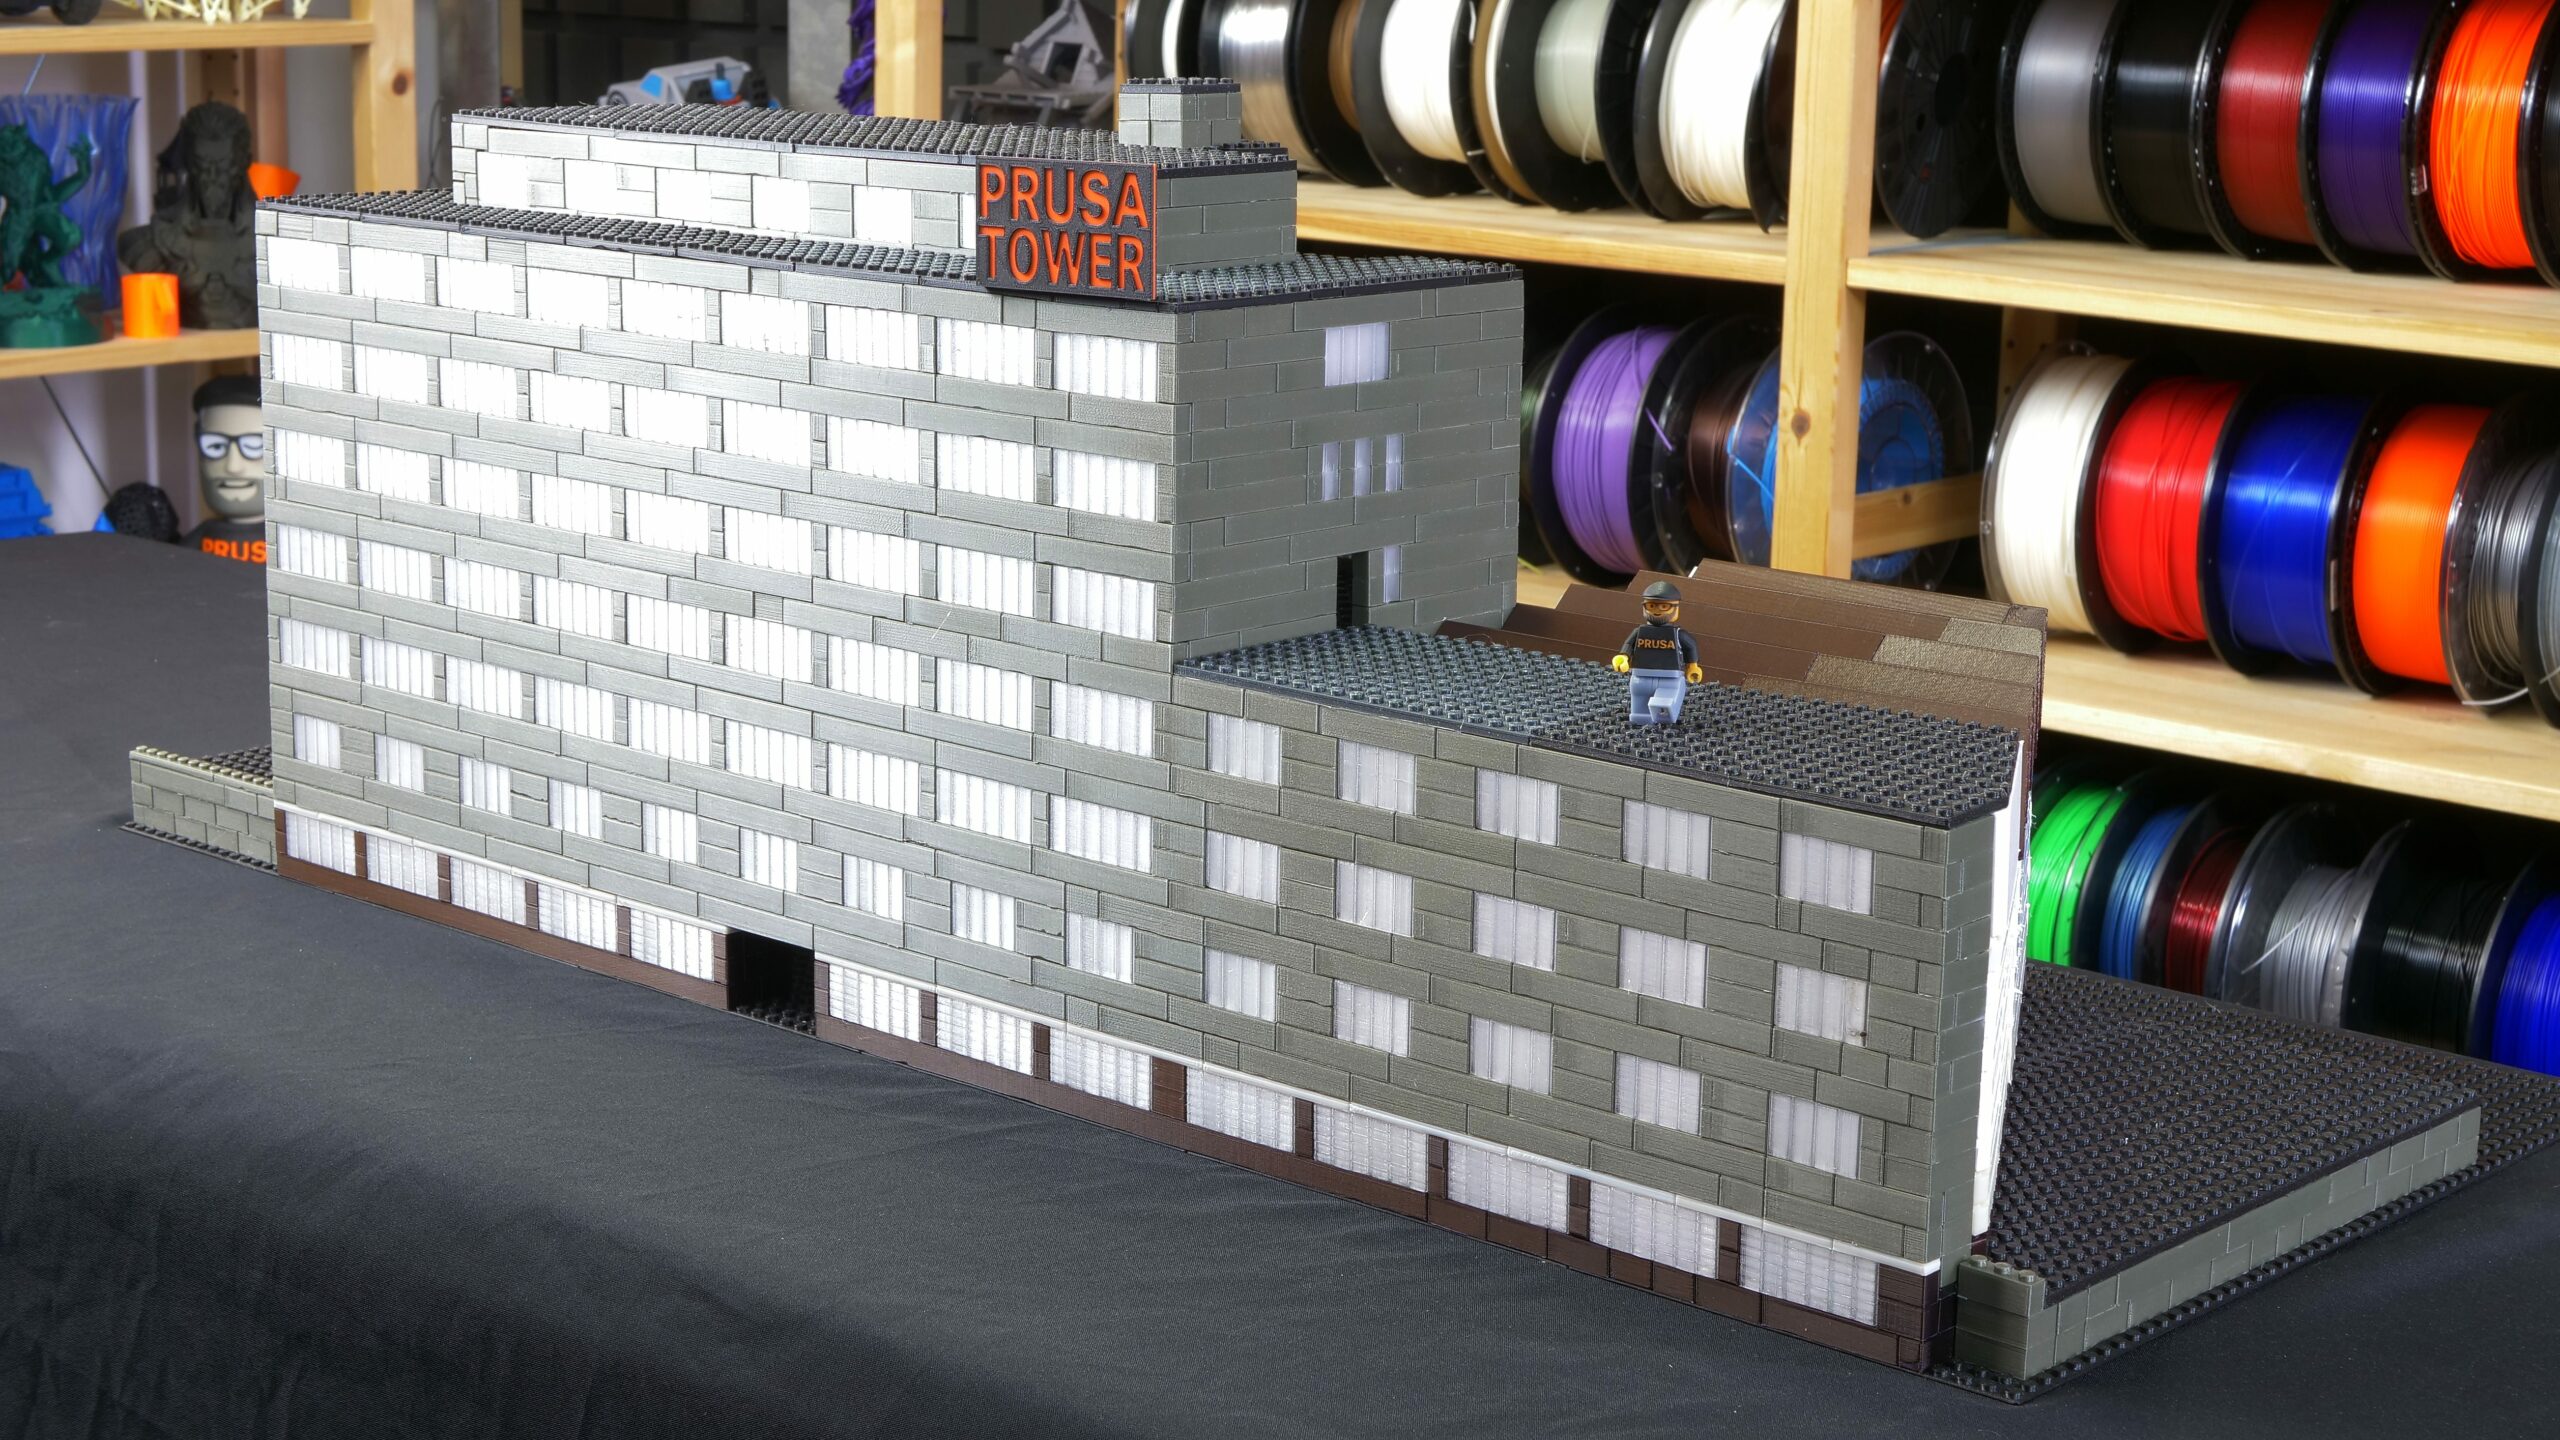 ven Politibetjent Anvendt How to make 3D printed LEGO and LEGO Duplo parts - Original Prusa 3D  Printers